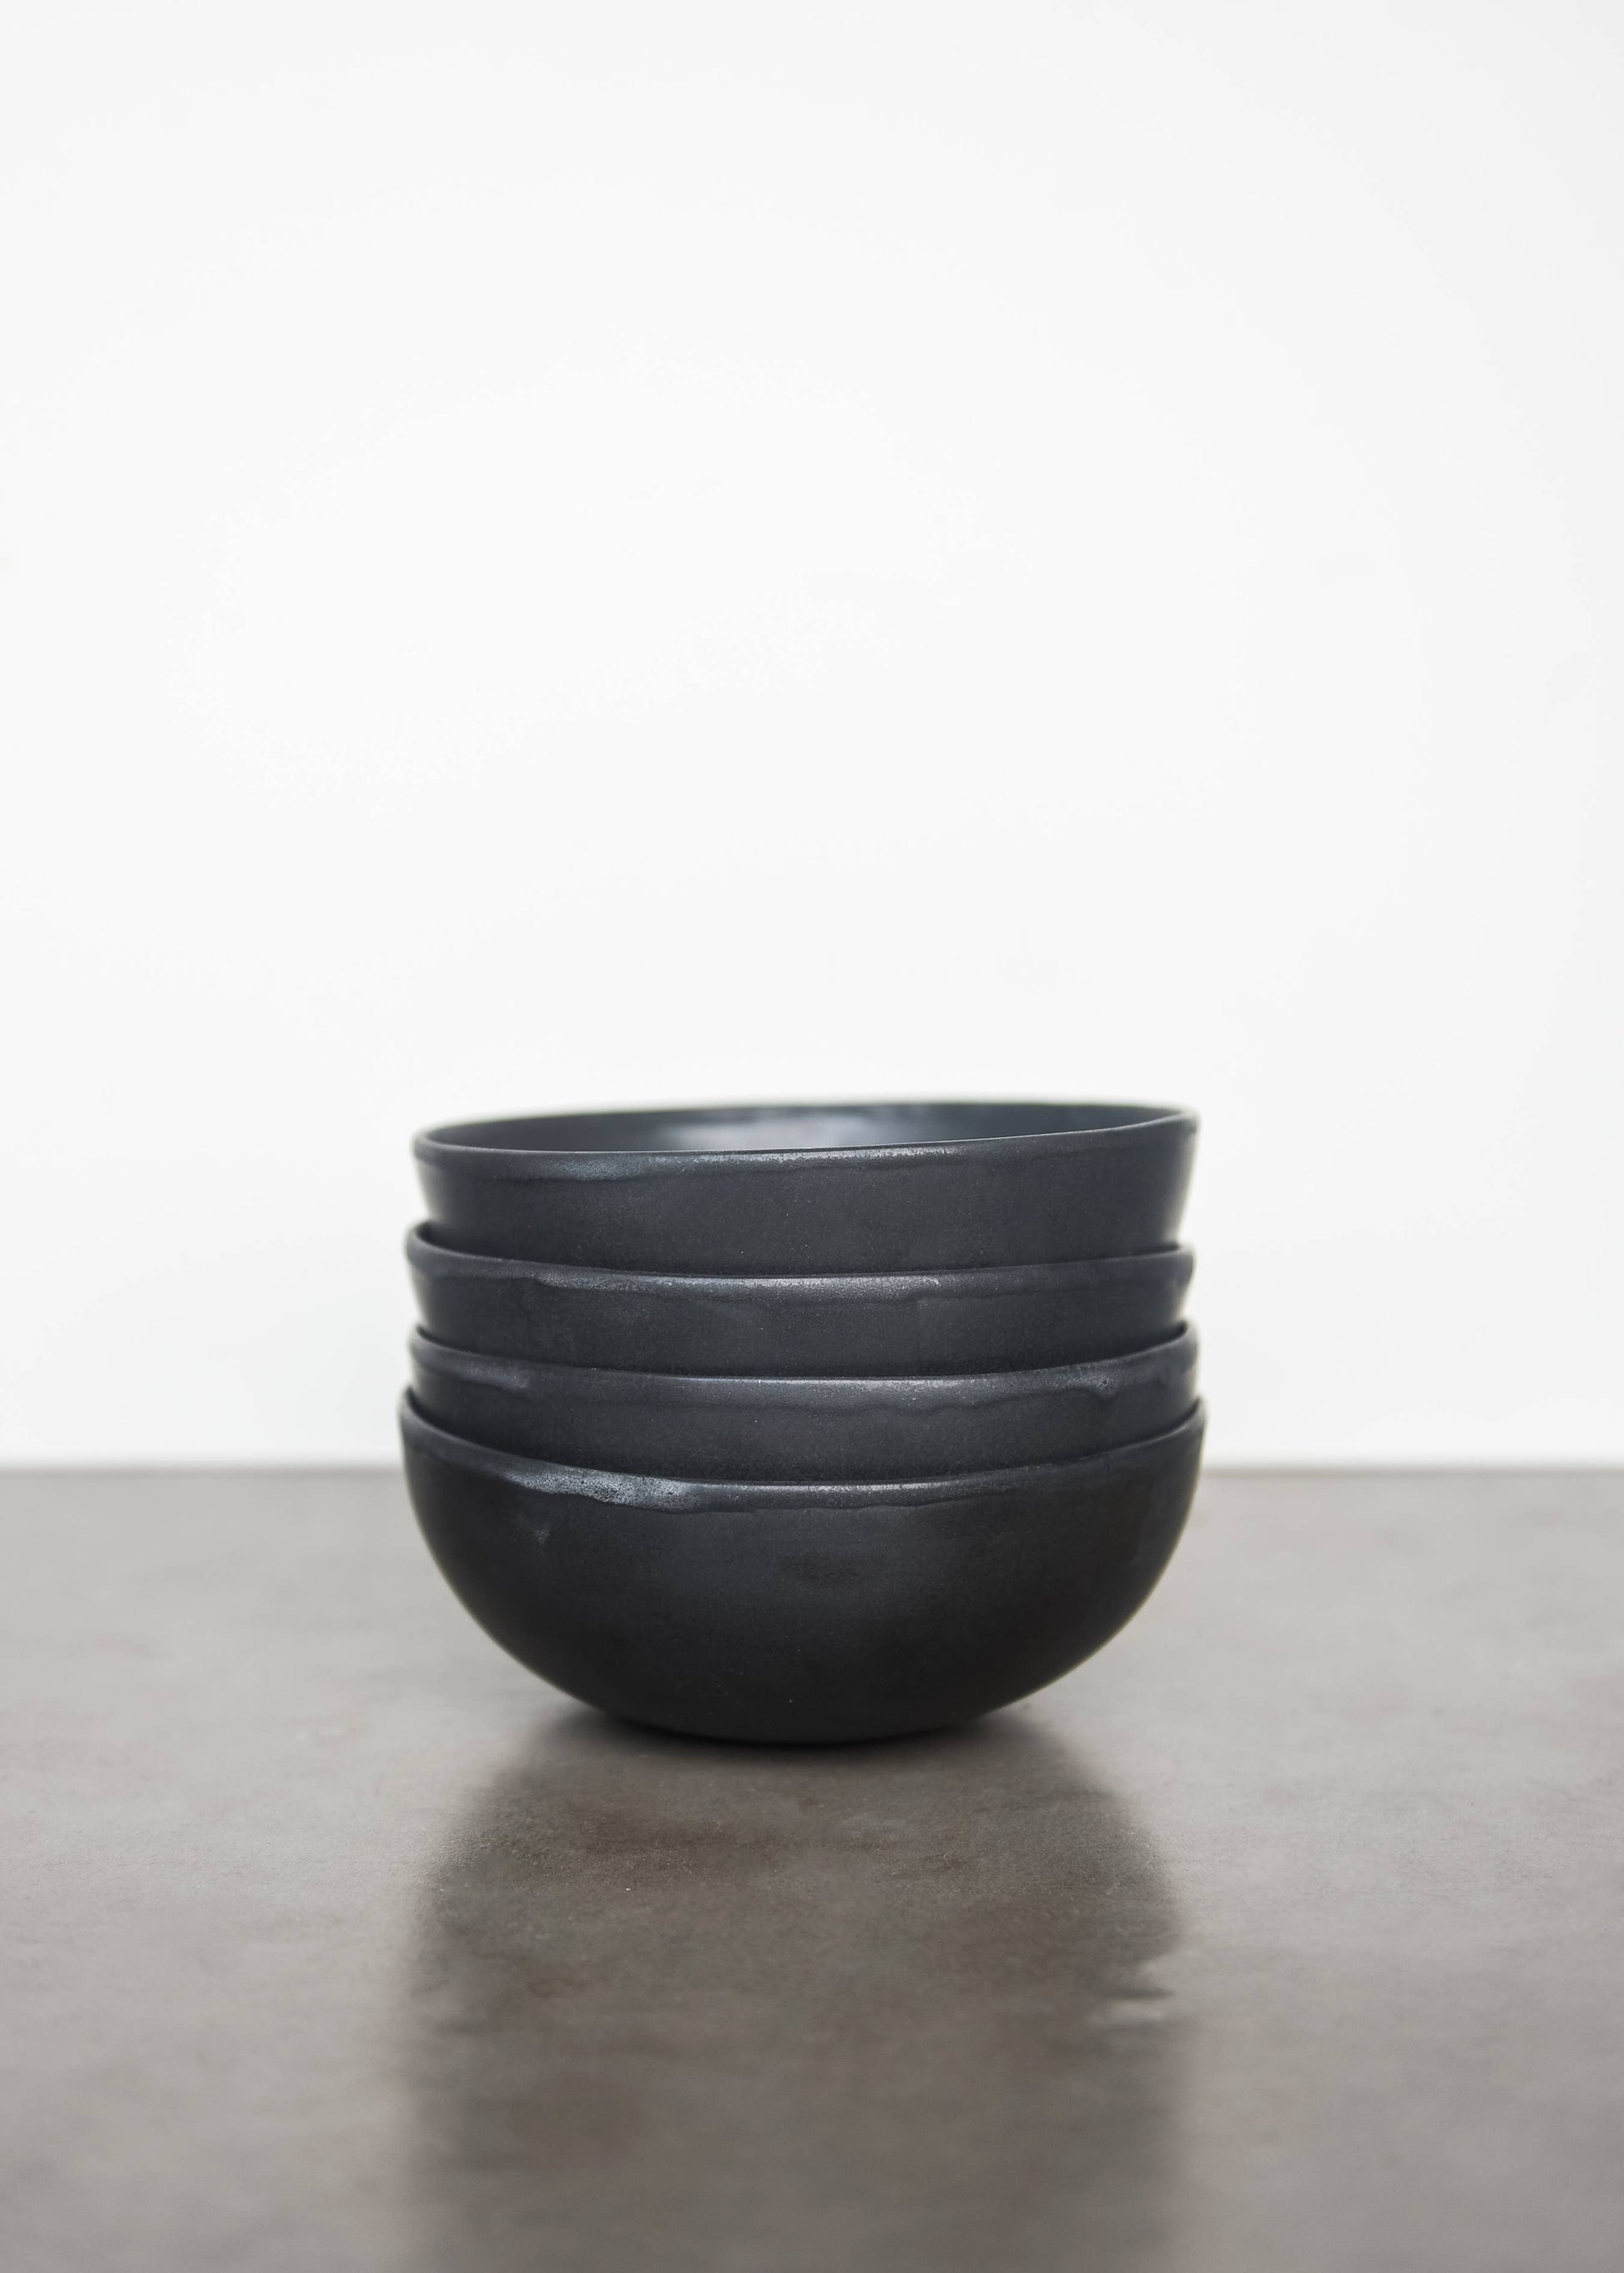 Ethical Trade Co Tabletop Everyday Bowl / Black Handmade Ukrainian Matte Stoneware Bowls